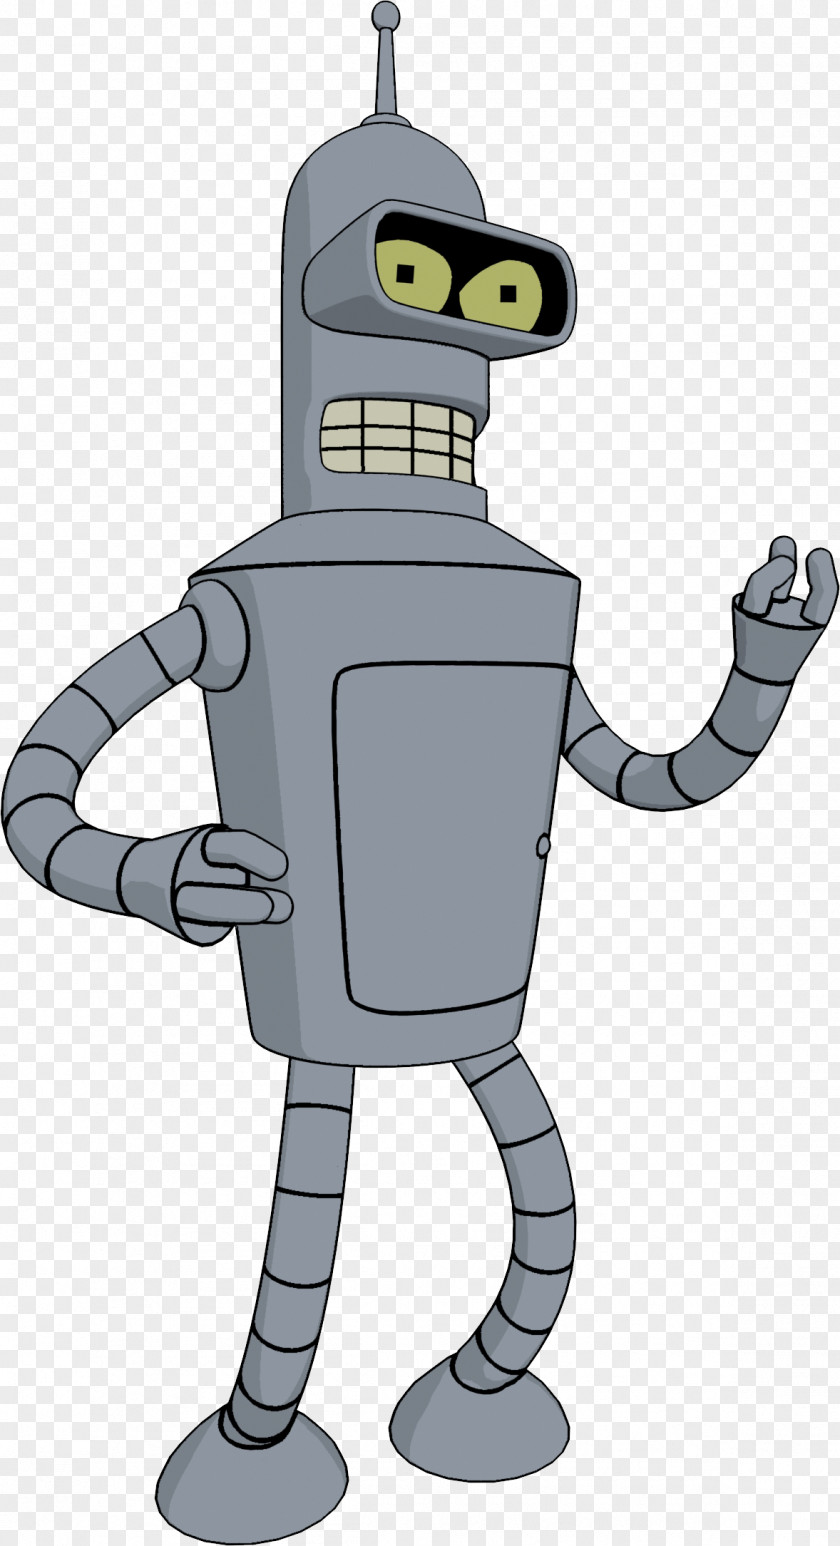 Bender Futurama Philip J. Fry Planet Express Ship PNG